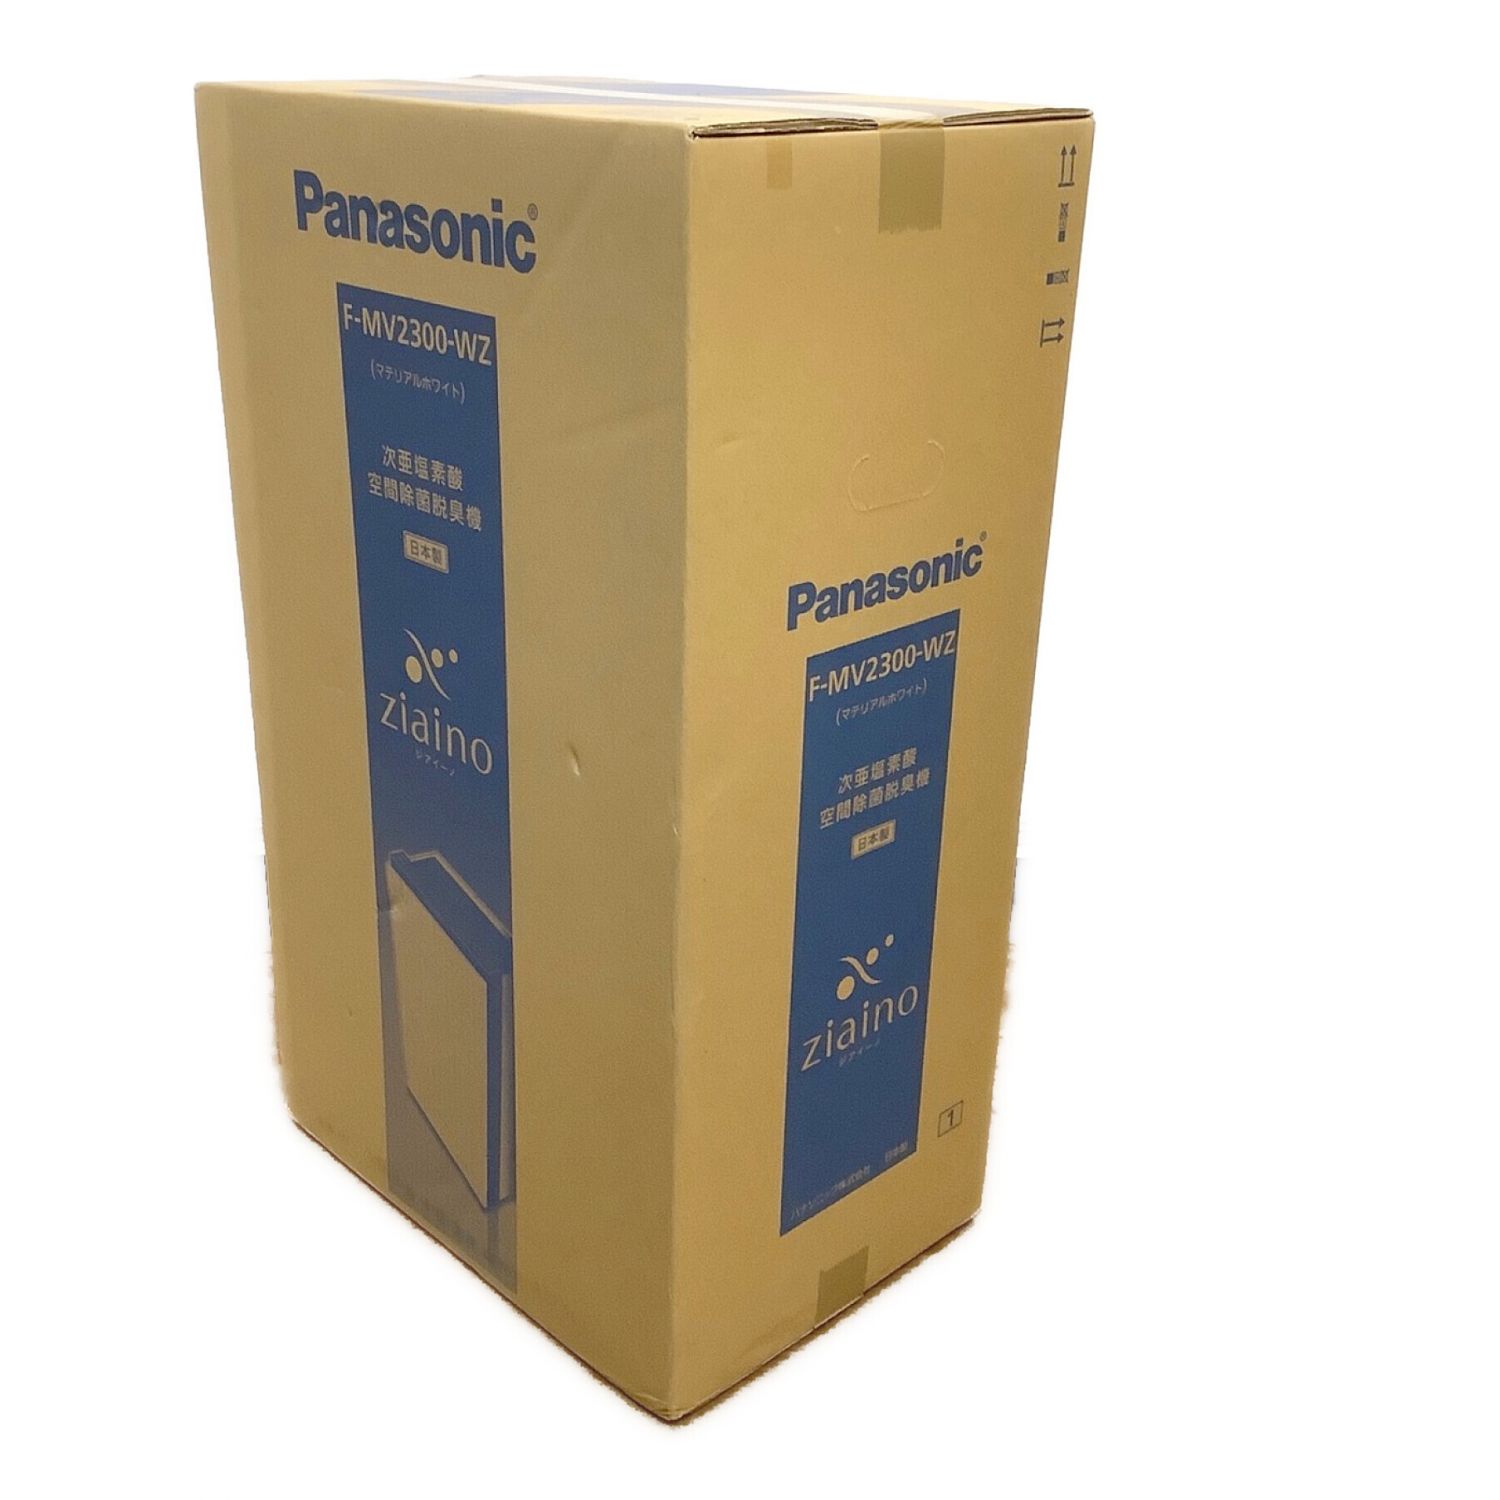 Panasonic ジアイーノ次亜塩素酸 空間除菌脱臭機 F-MV2300-W… - 空気